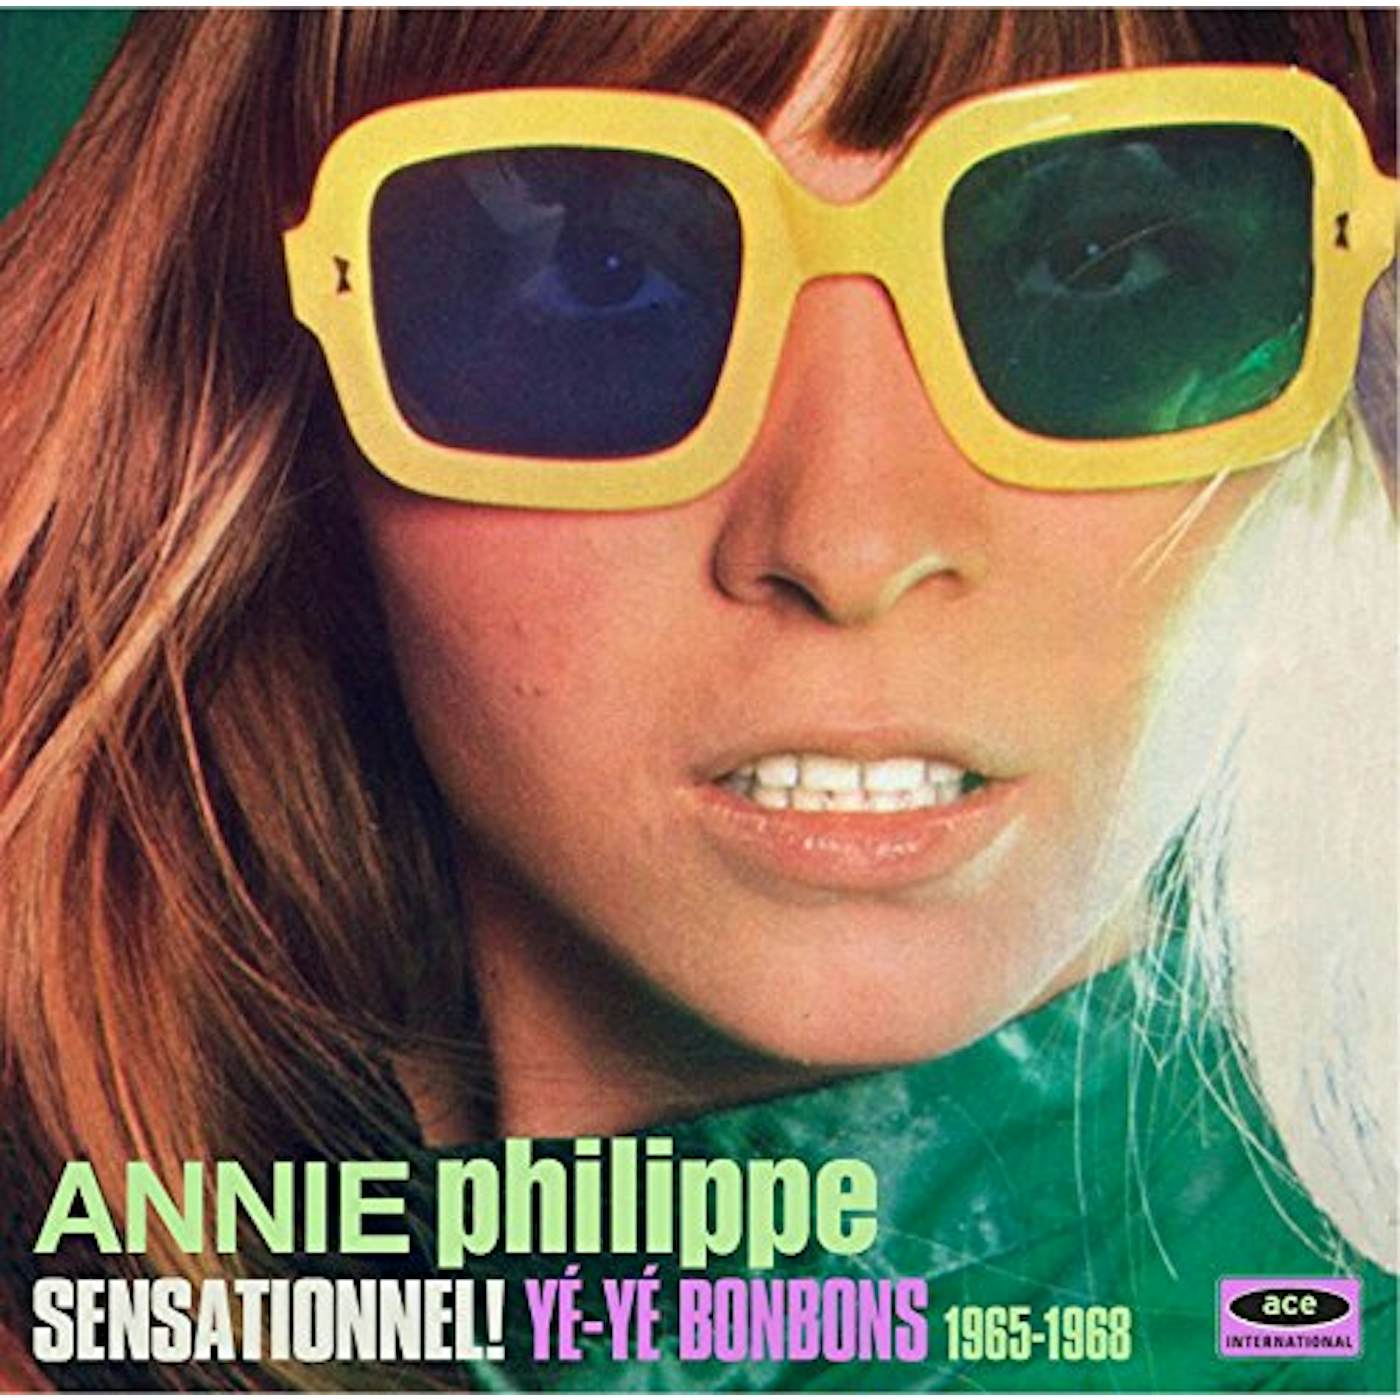 Annie Philippe SENSATIONNEL YE-YE BONBONS 1965-68 CD